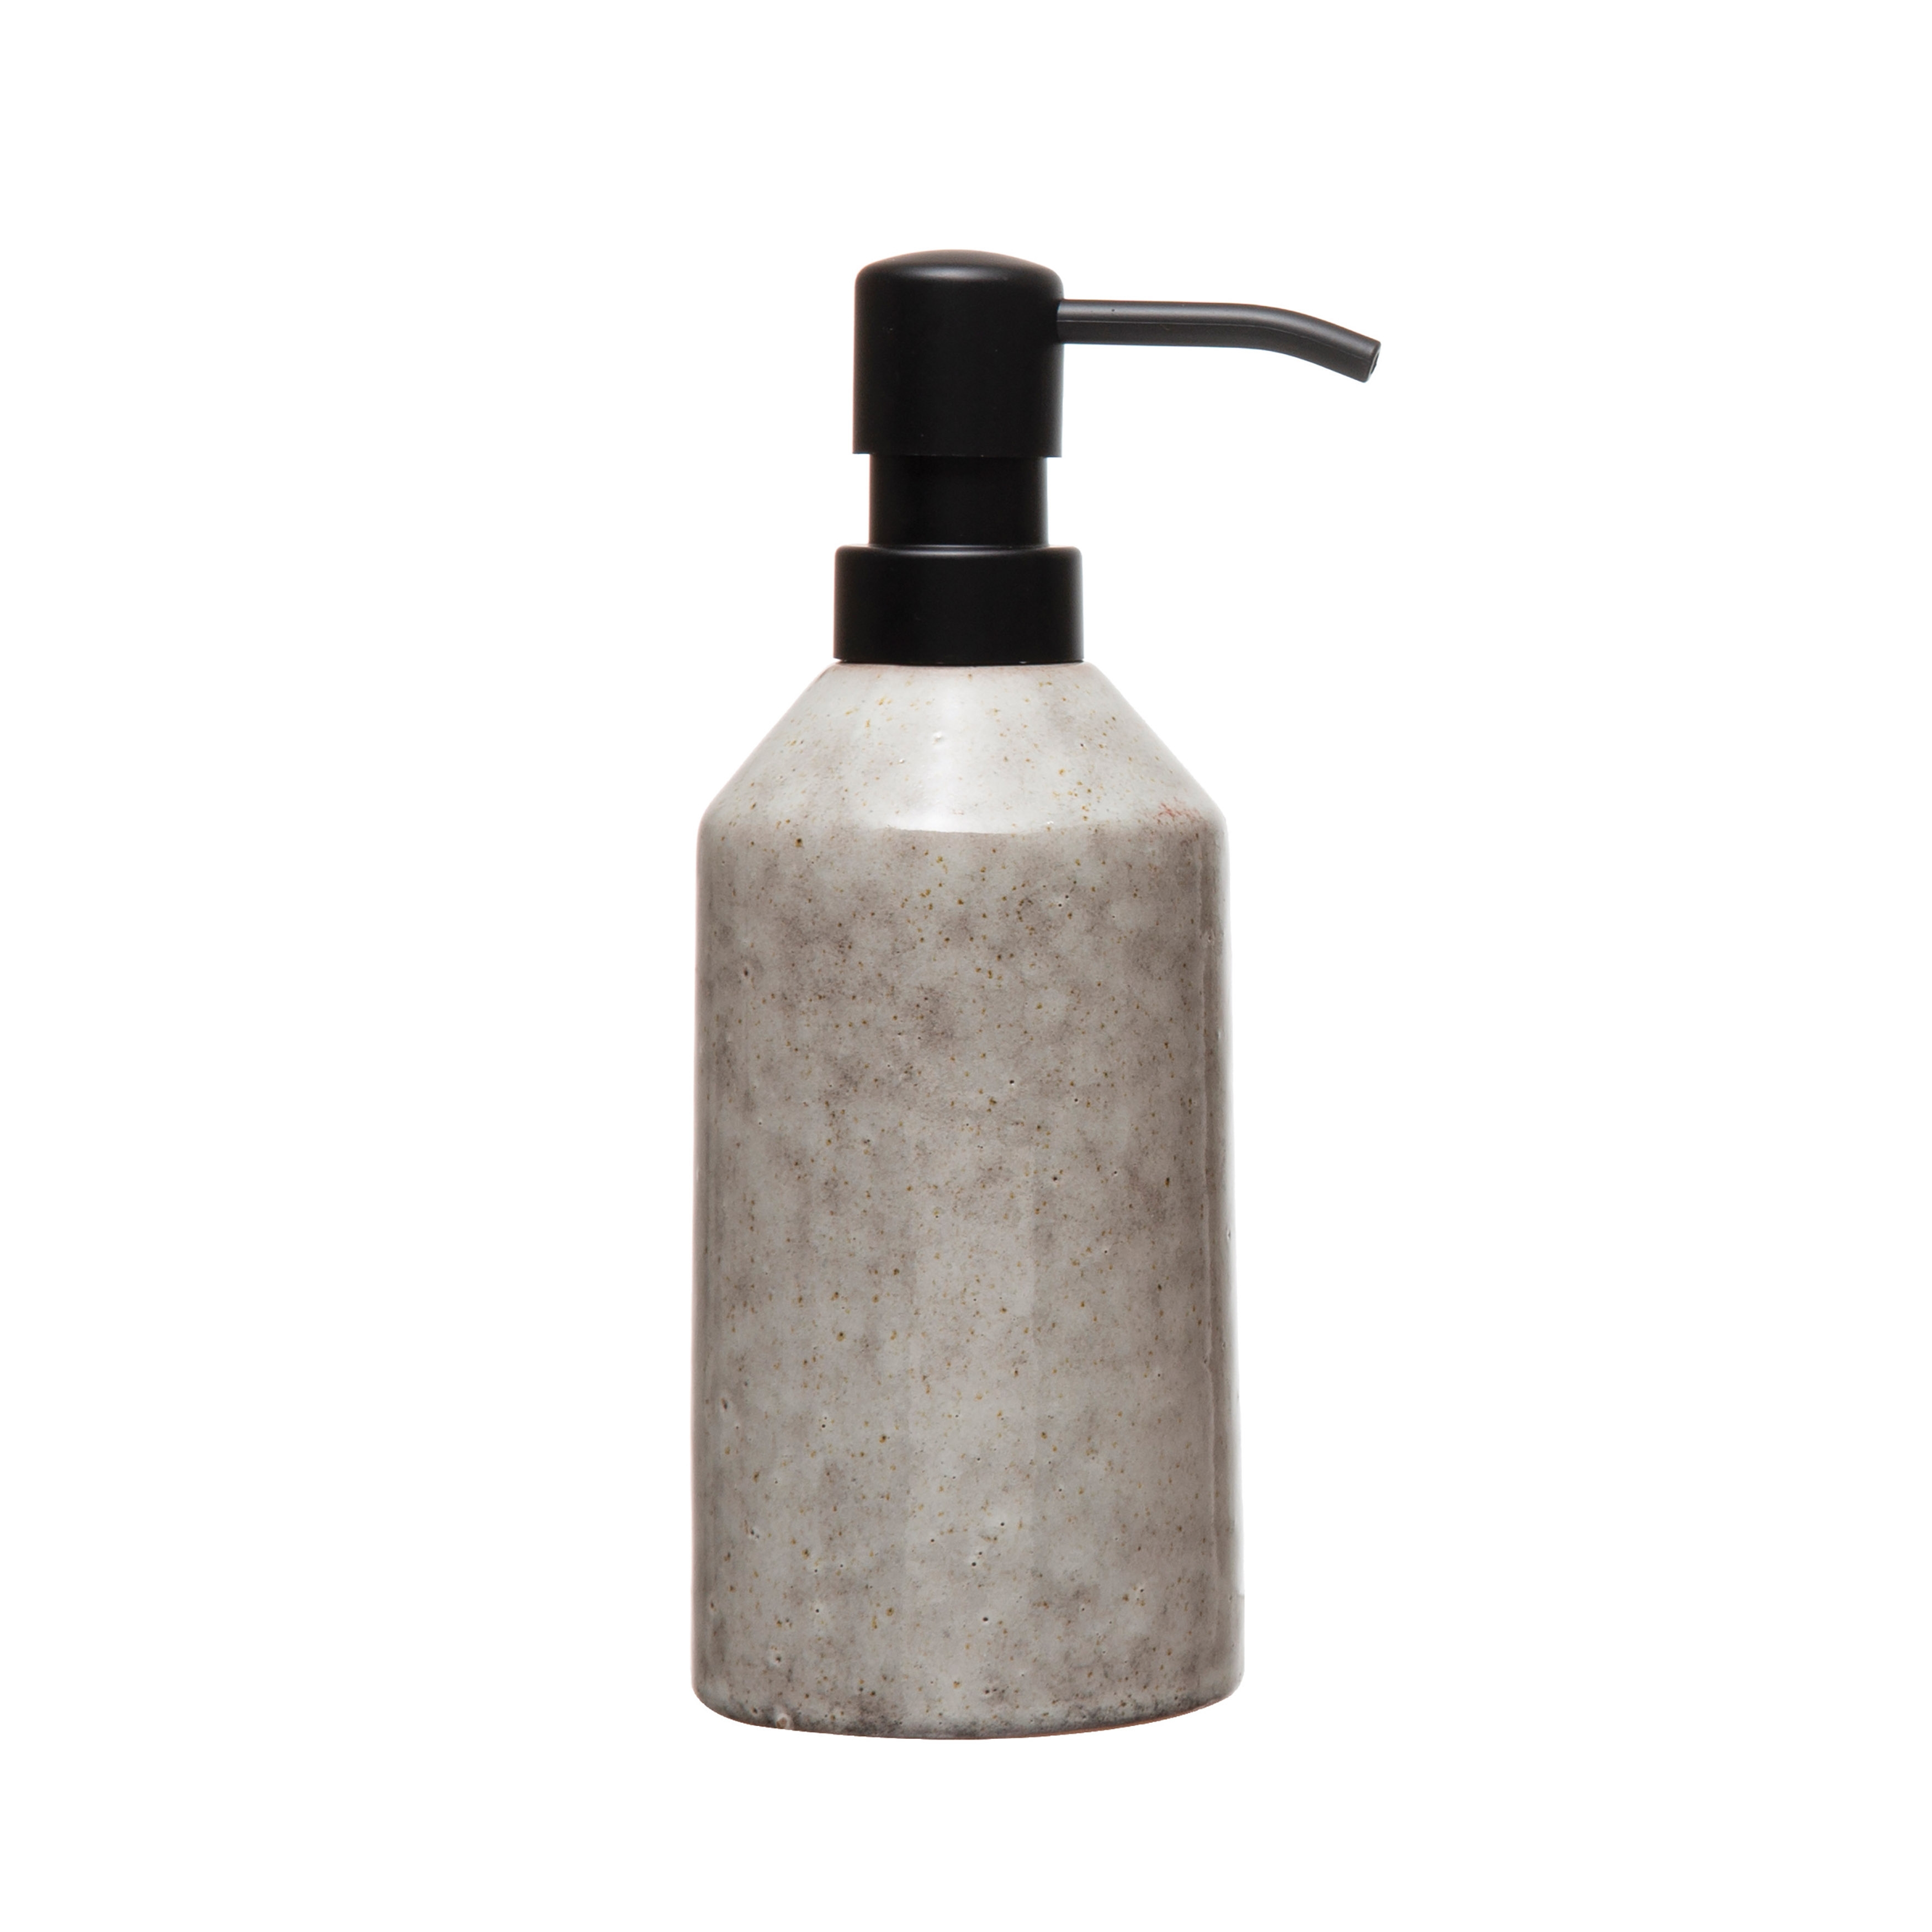 Neutral Colored Reactive Glaze Stoneware Soap Dispenser with Black Pump - Image 0